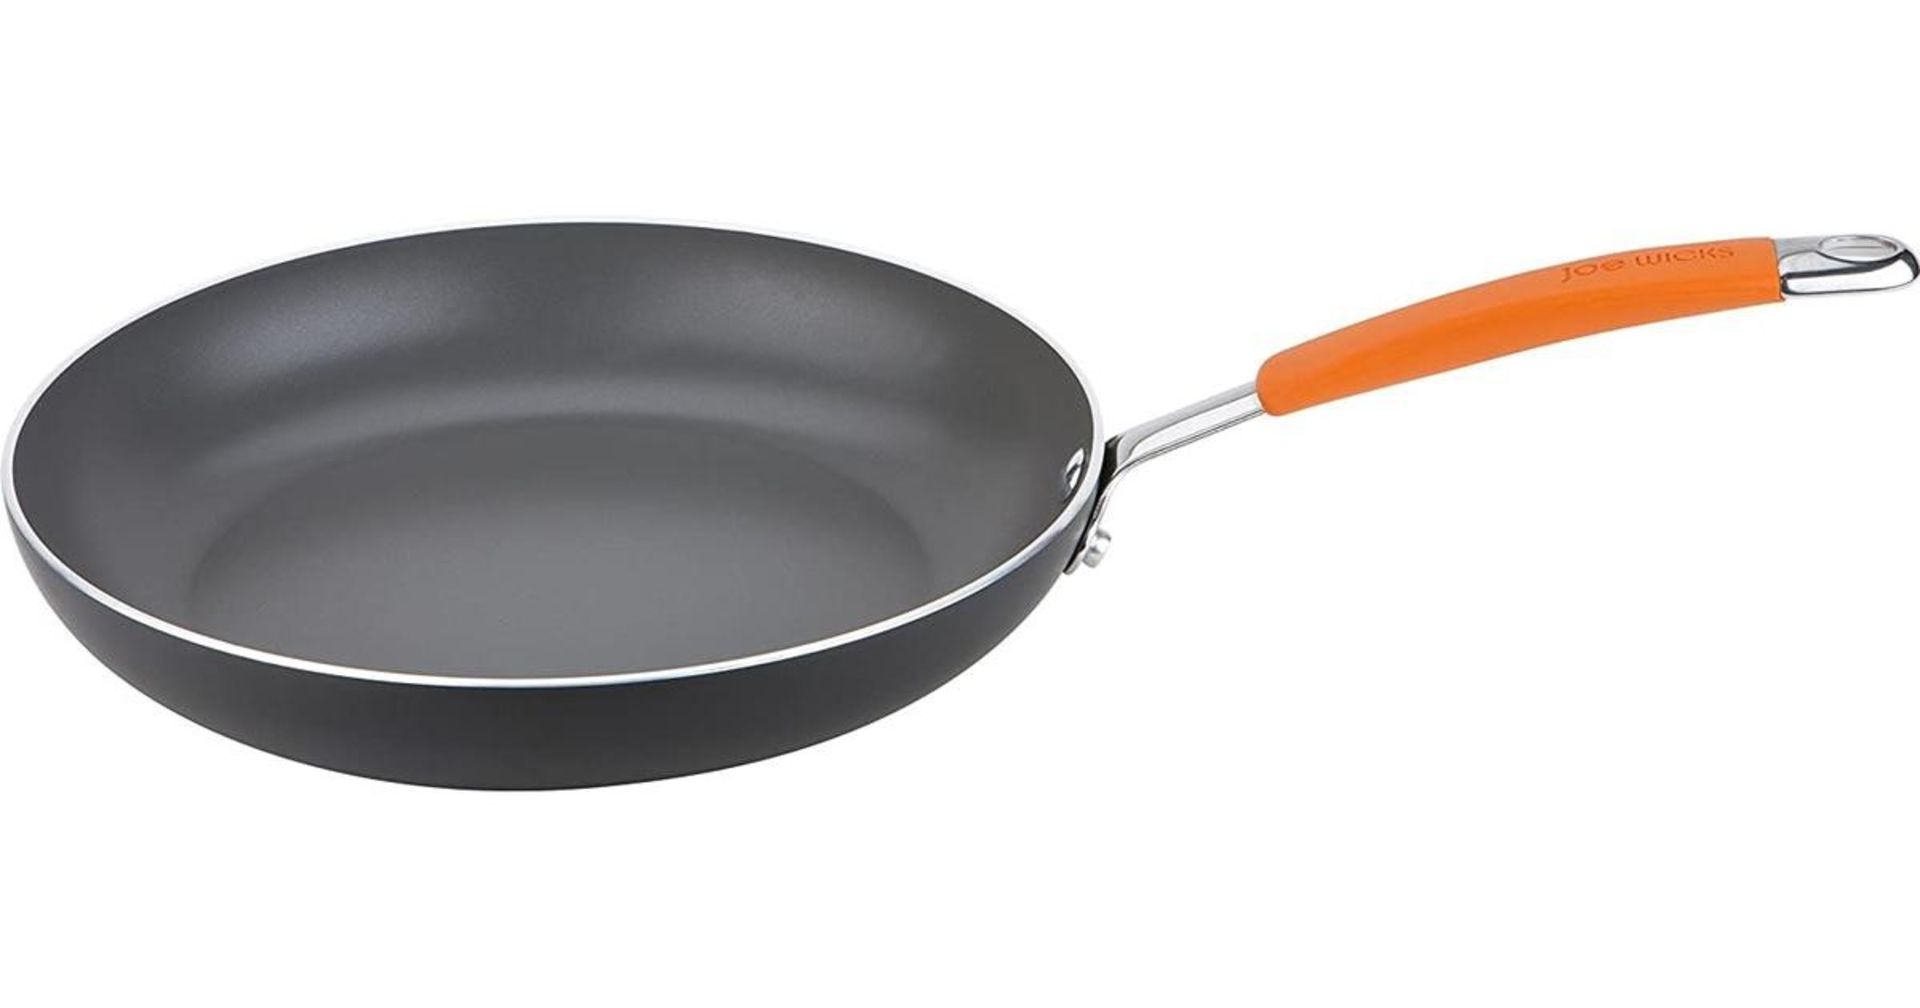 New Joe Wicks Easy Release Non-Stick Alumium Frying Pan